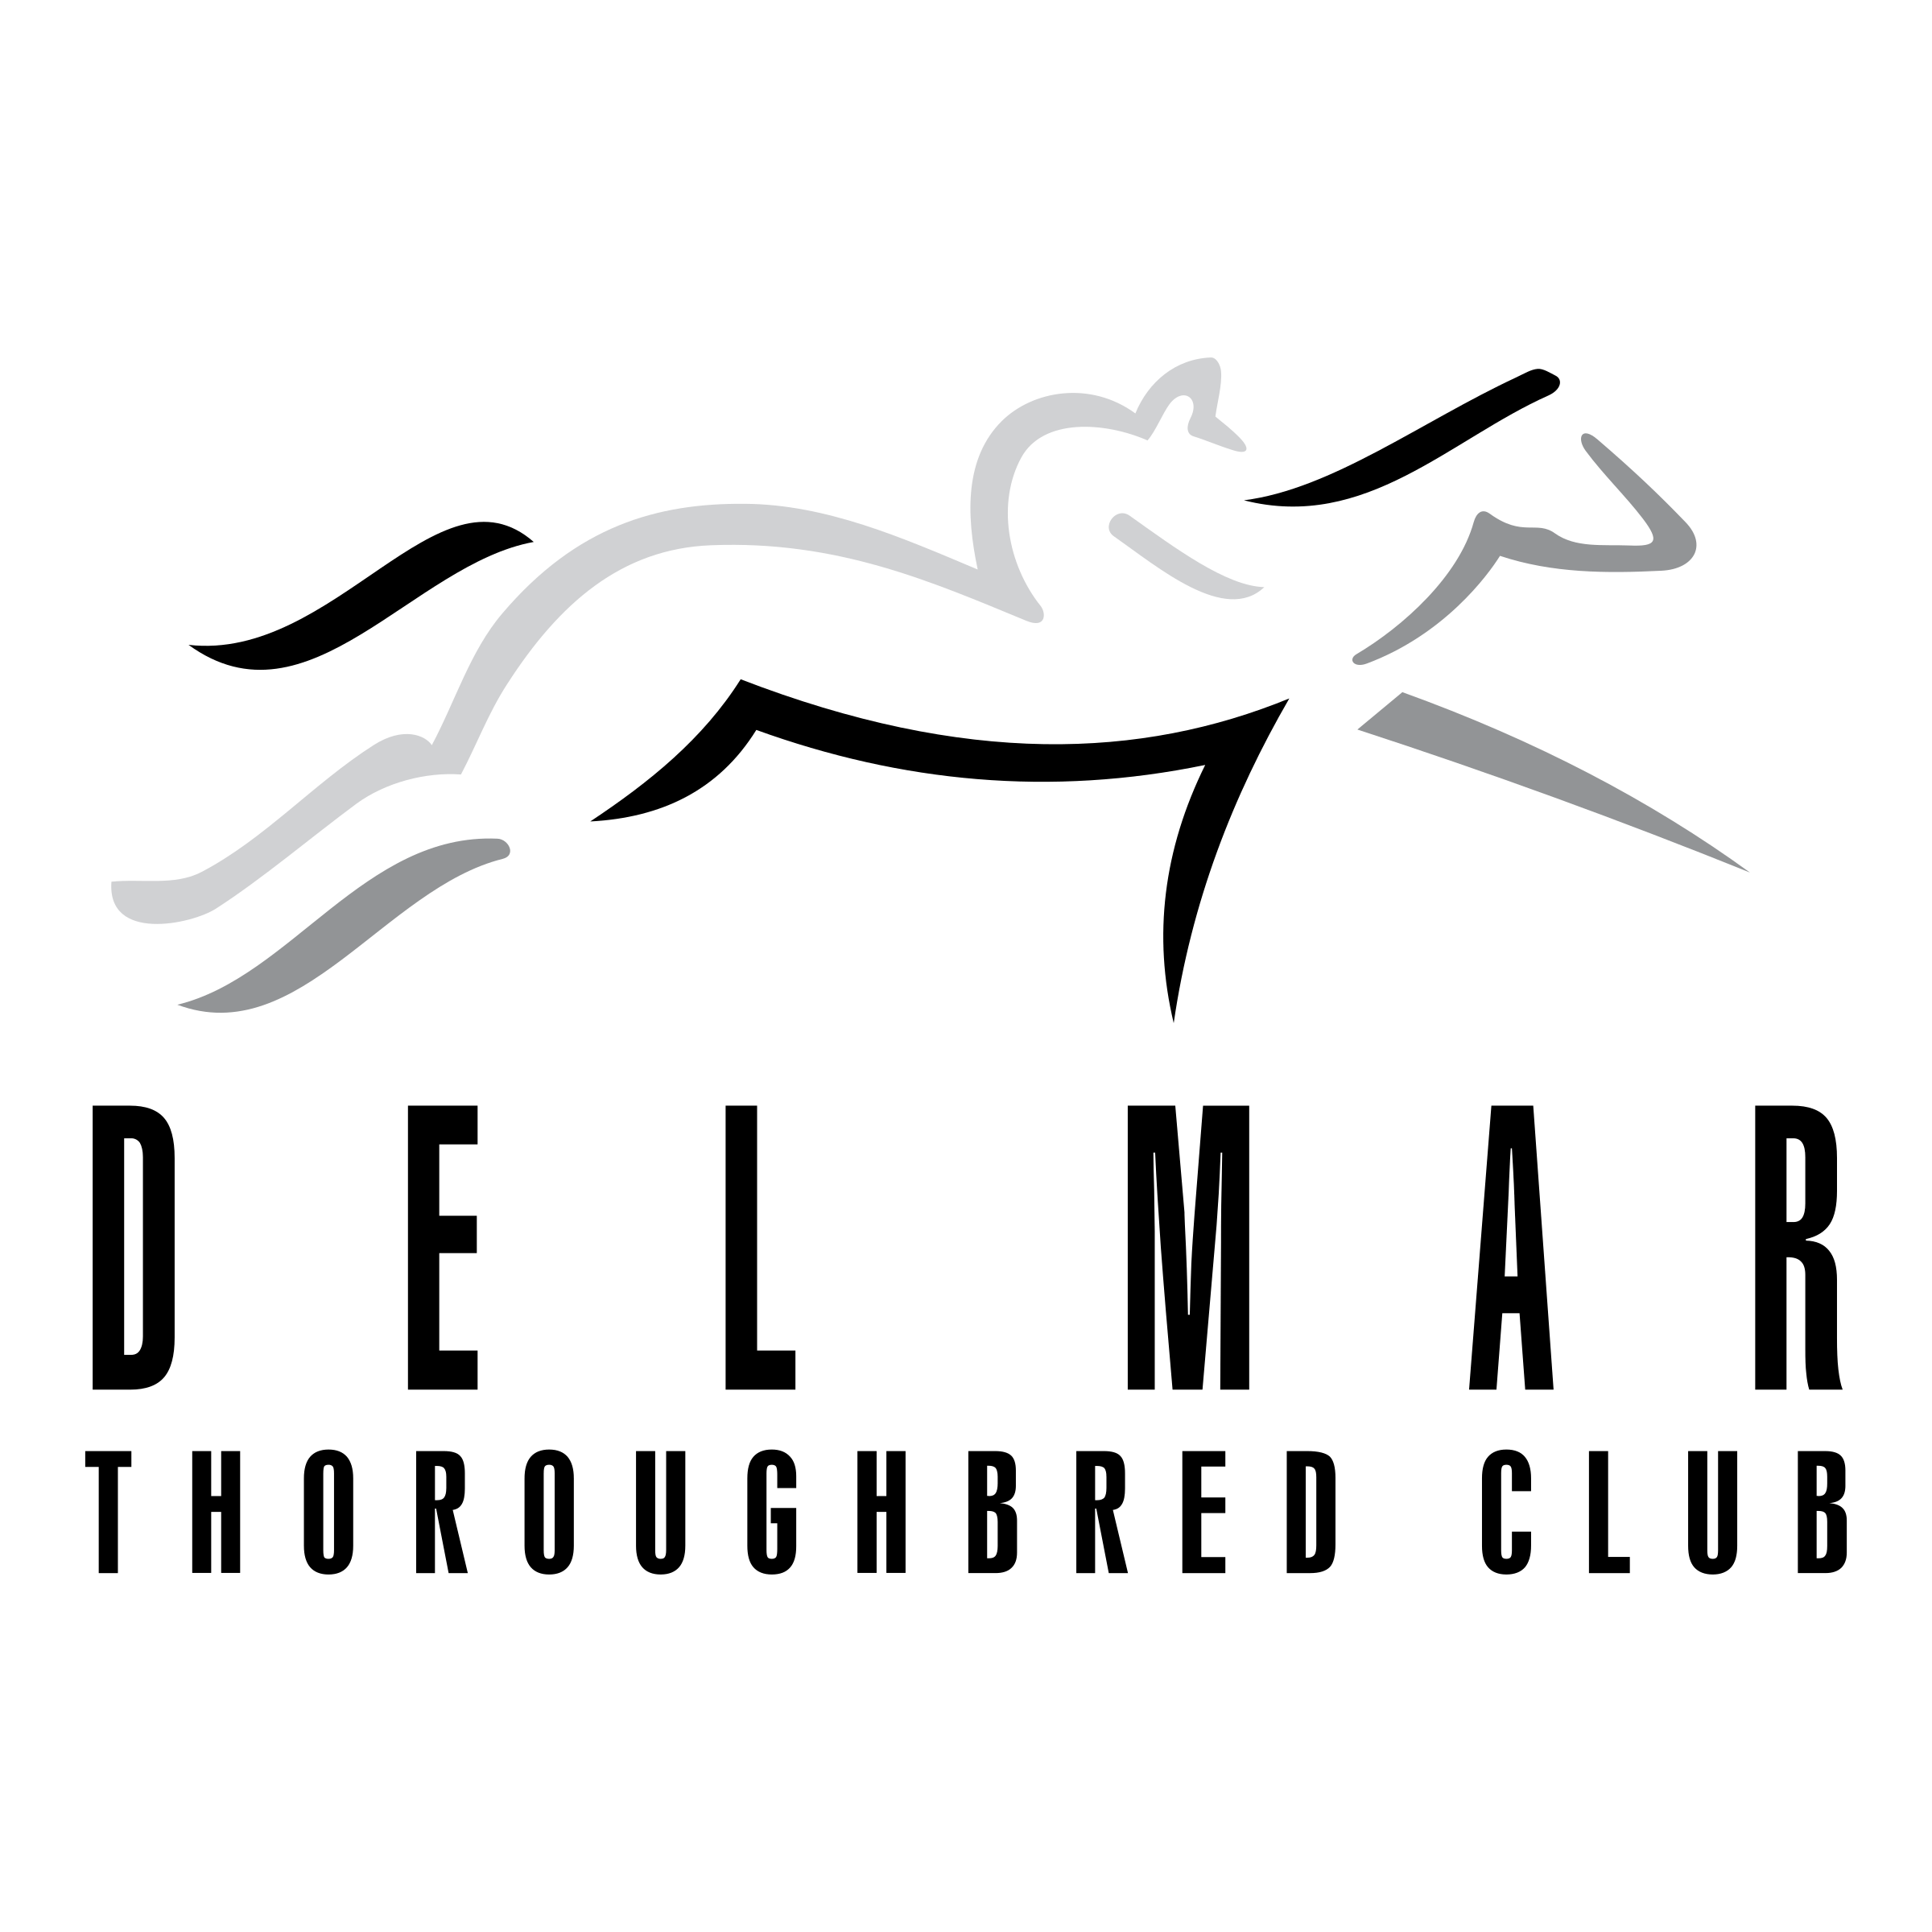 Thoroughbred Logo - Del Mar Thoroughbred Club Logo PNG Transparent & SVG Vector ...